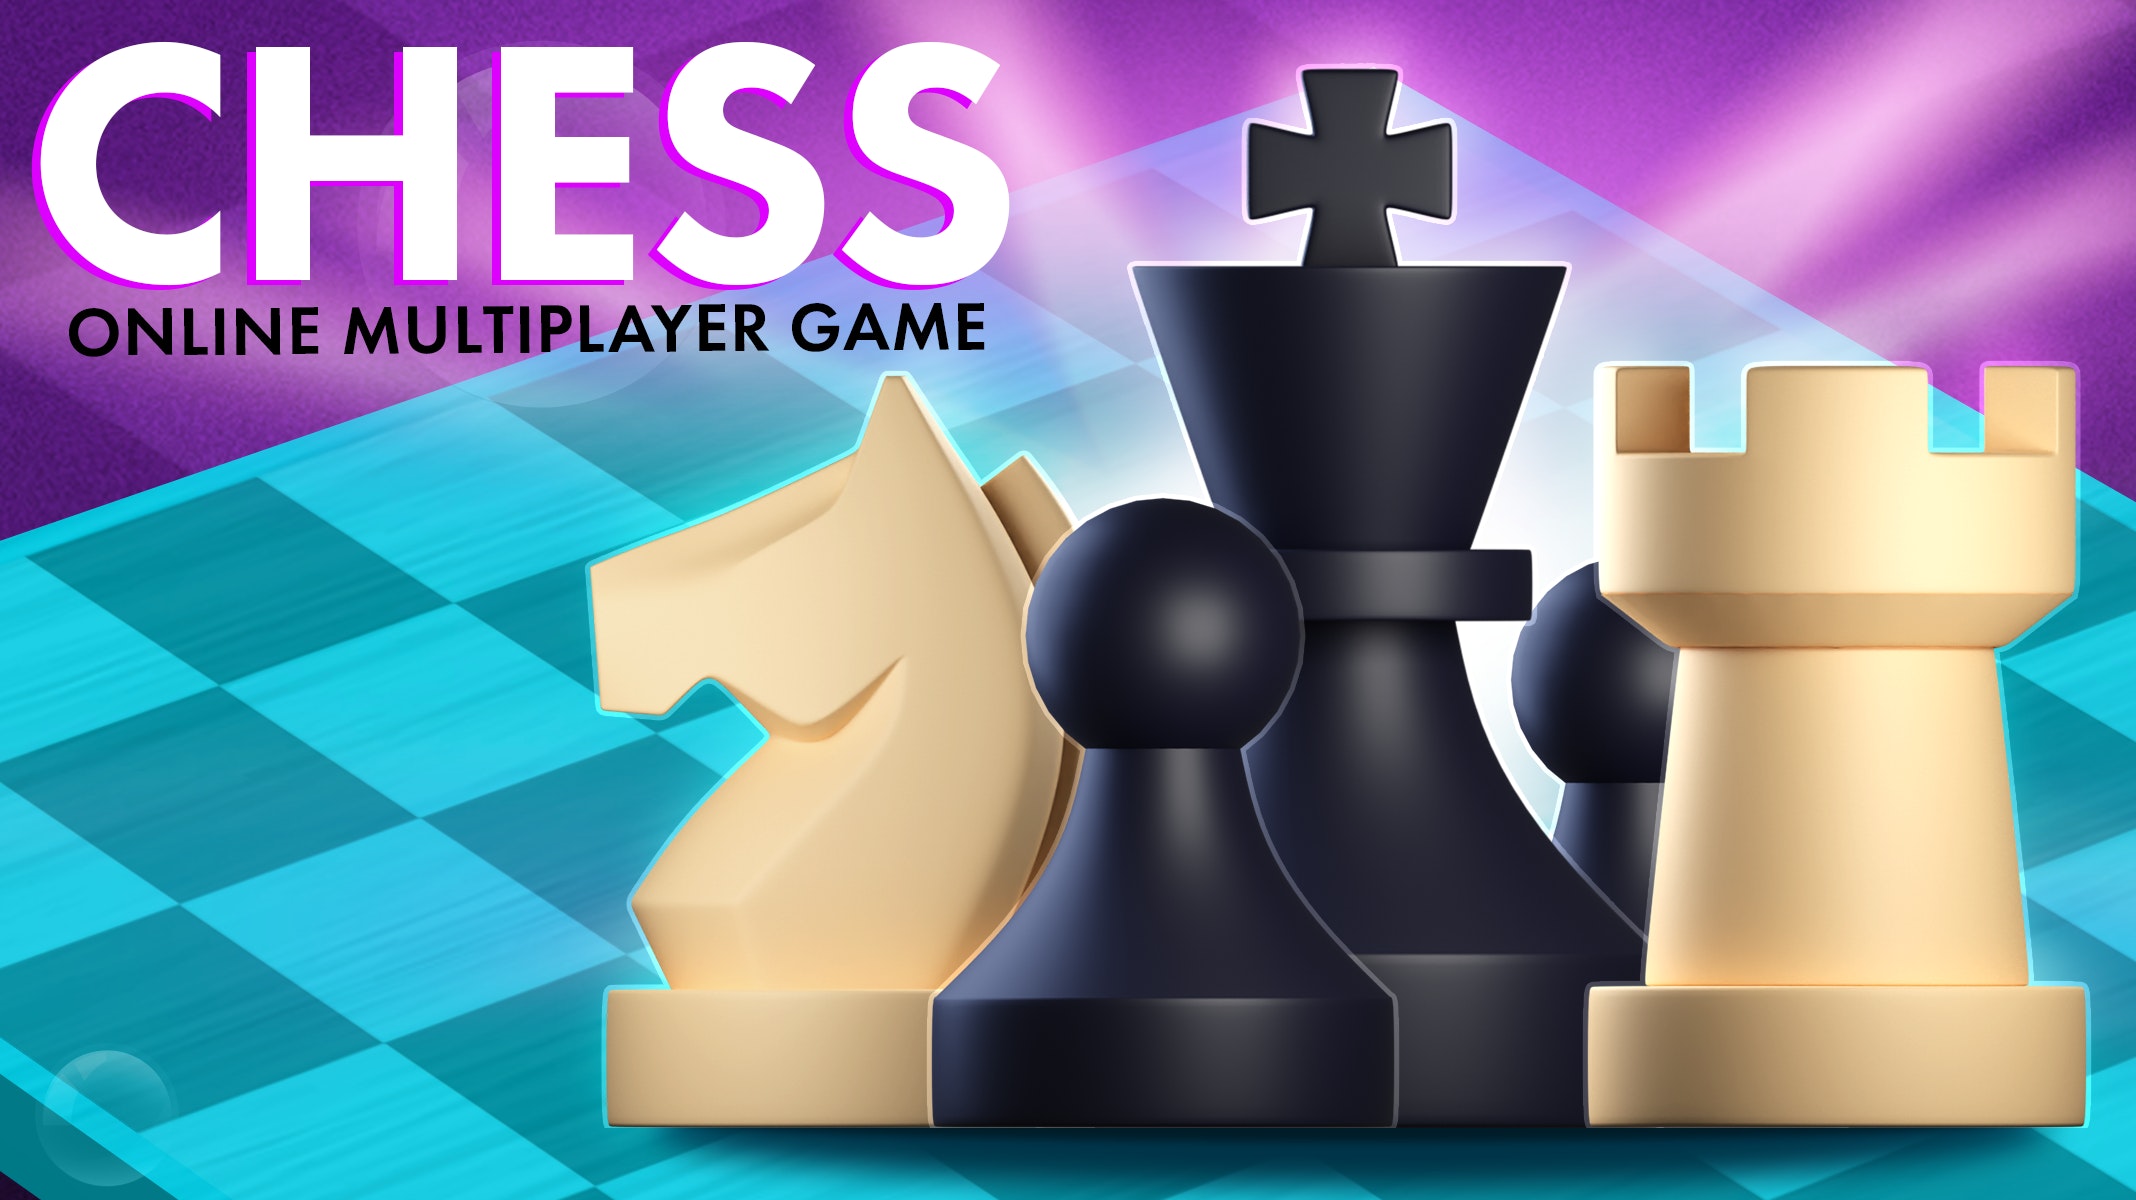 CO-OP GAMES 👥 - Play Online Games!